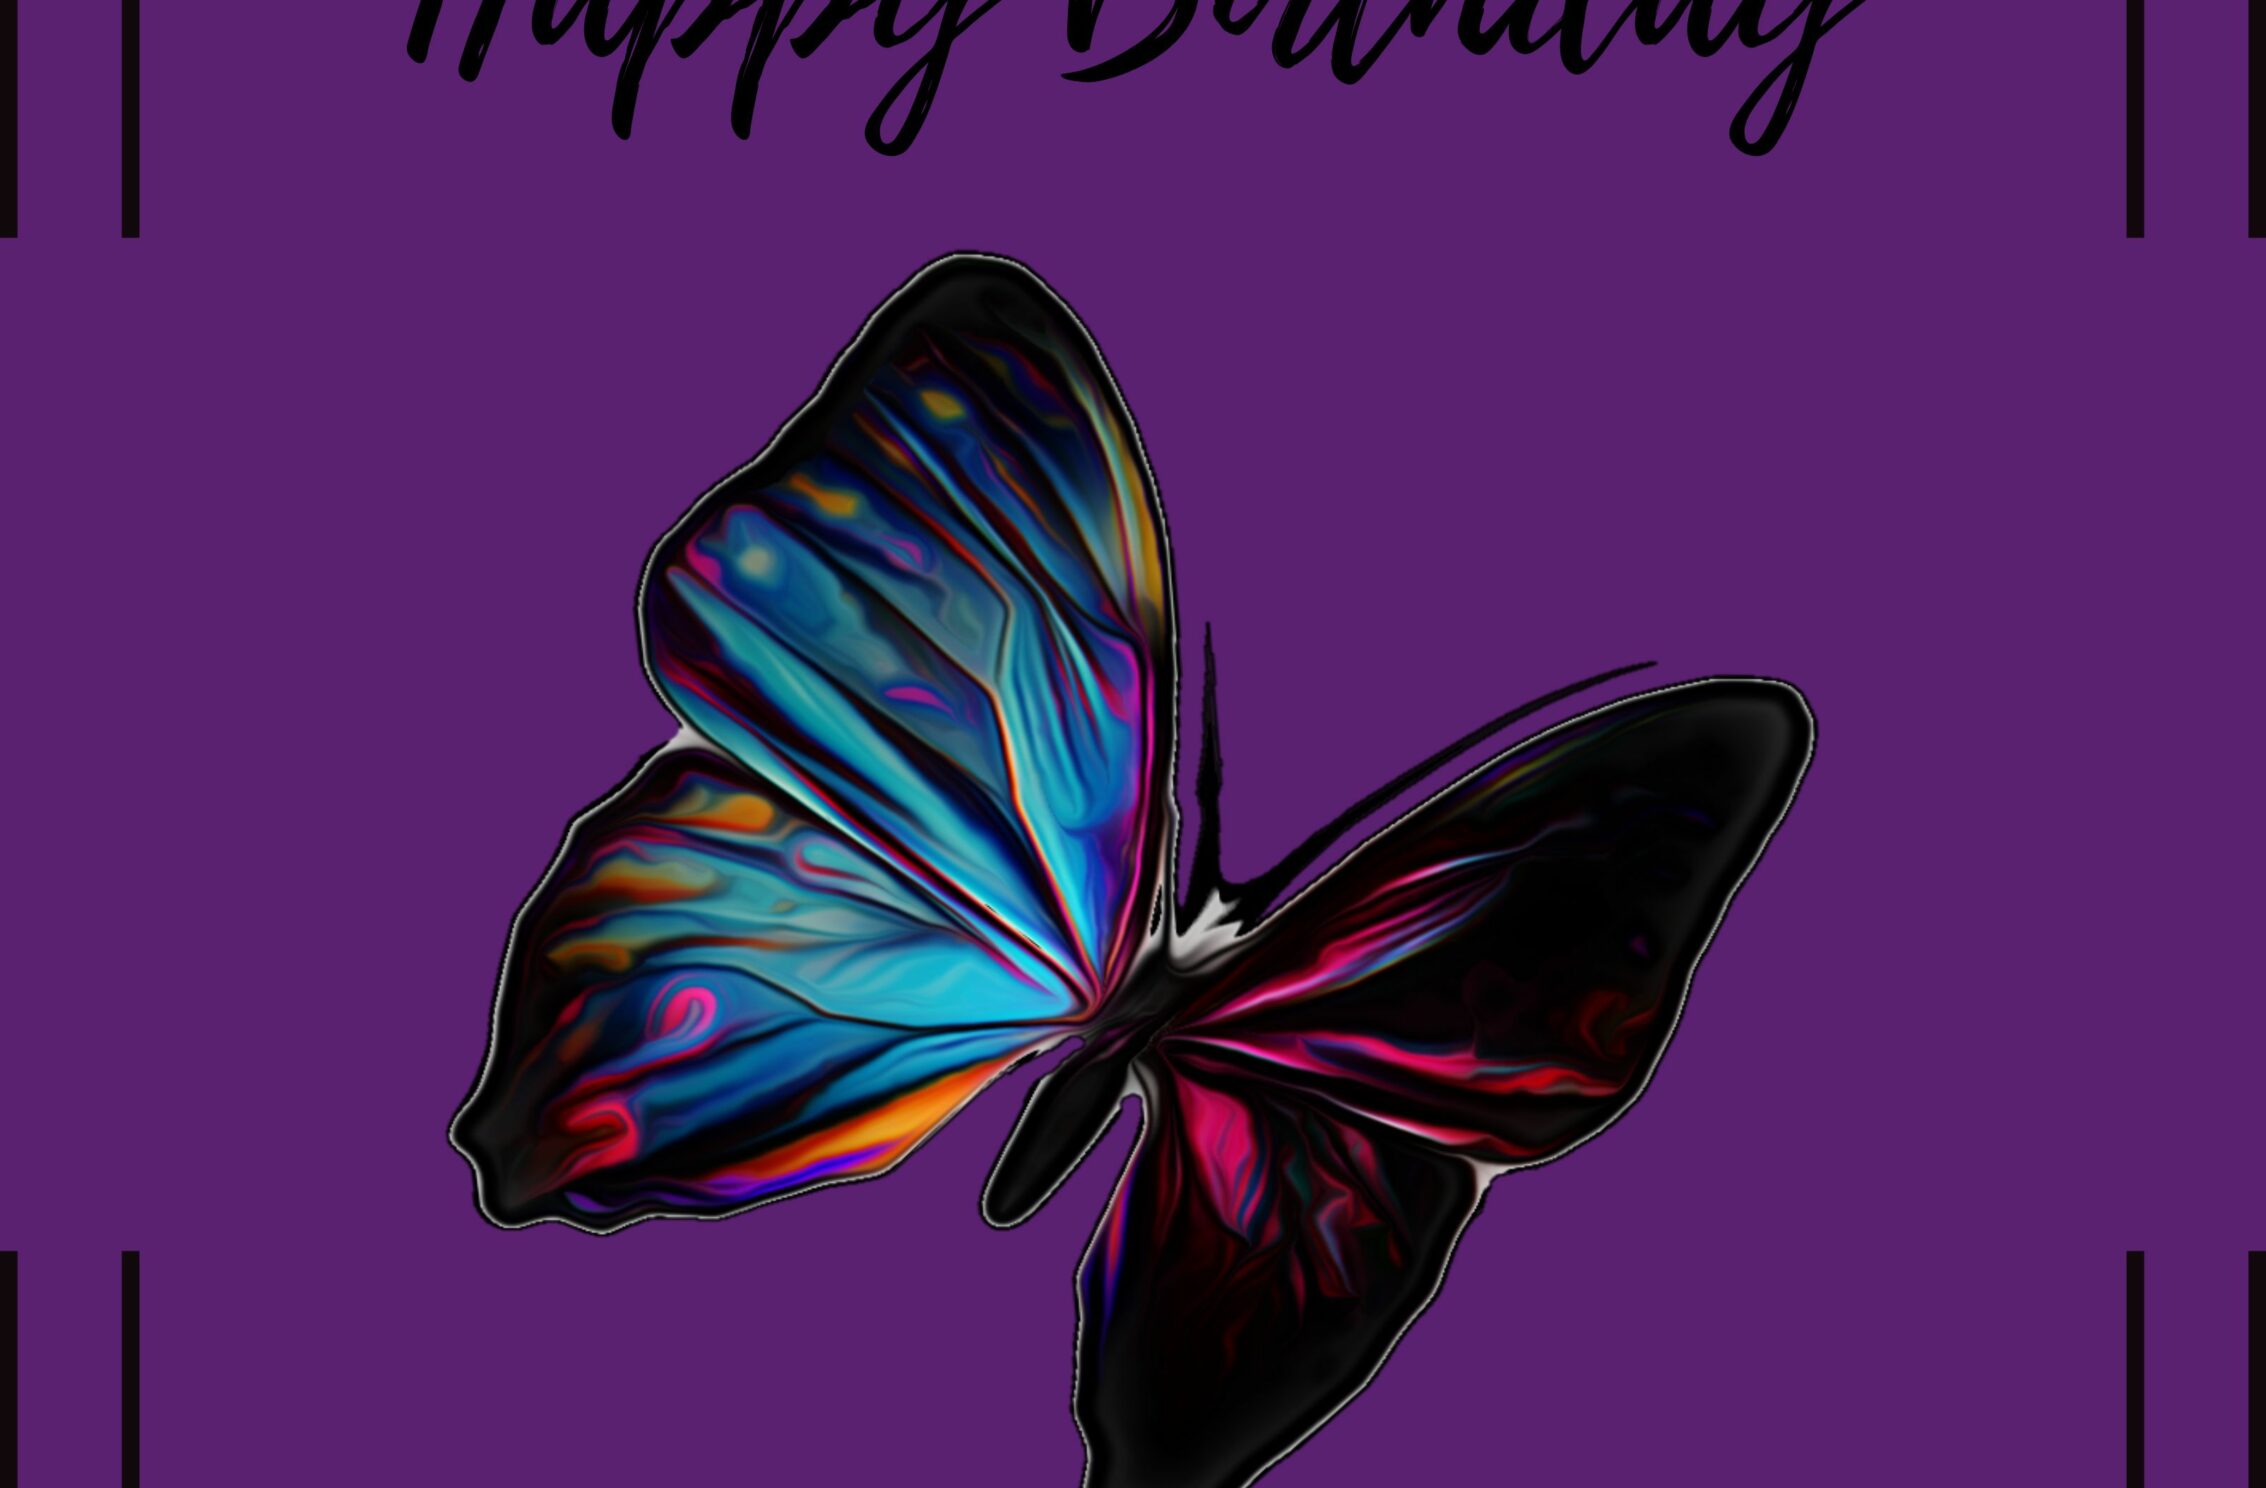 2266x1488 wallpaper Happy Birthday Rainbow Butterfly Ipad Wallpaper 2266x1488 pixels resolution